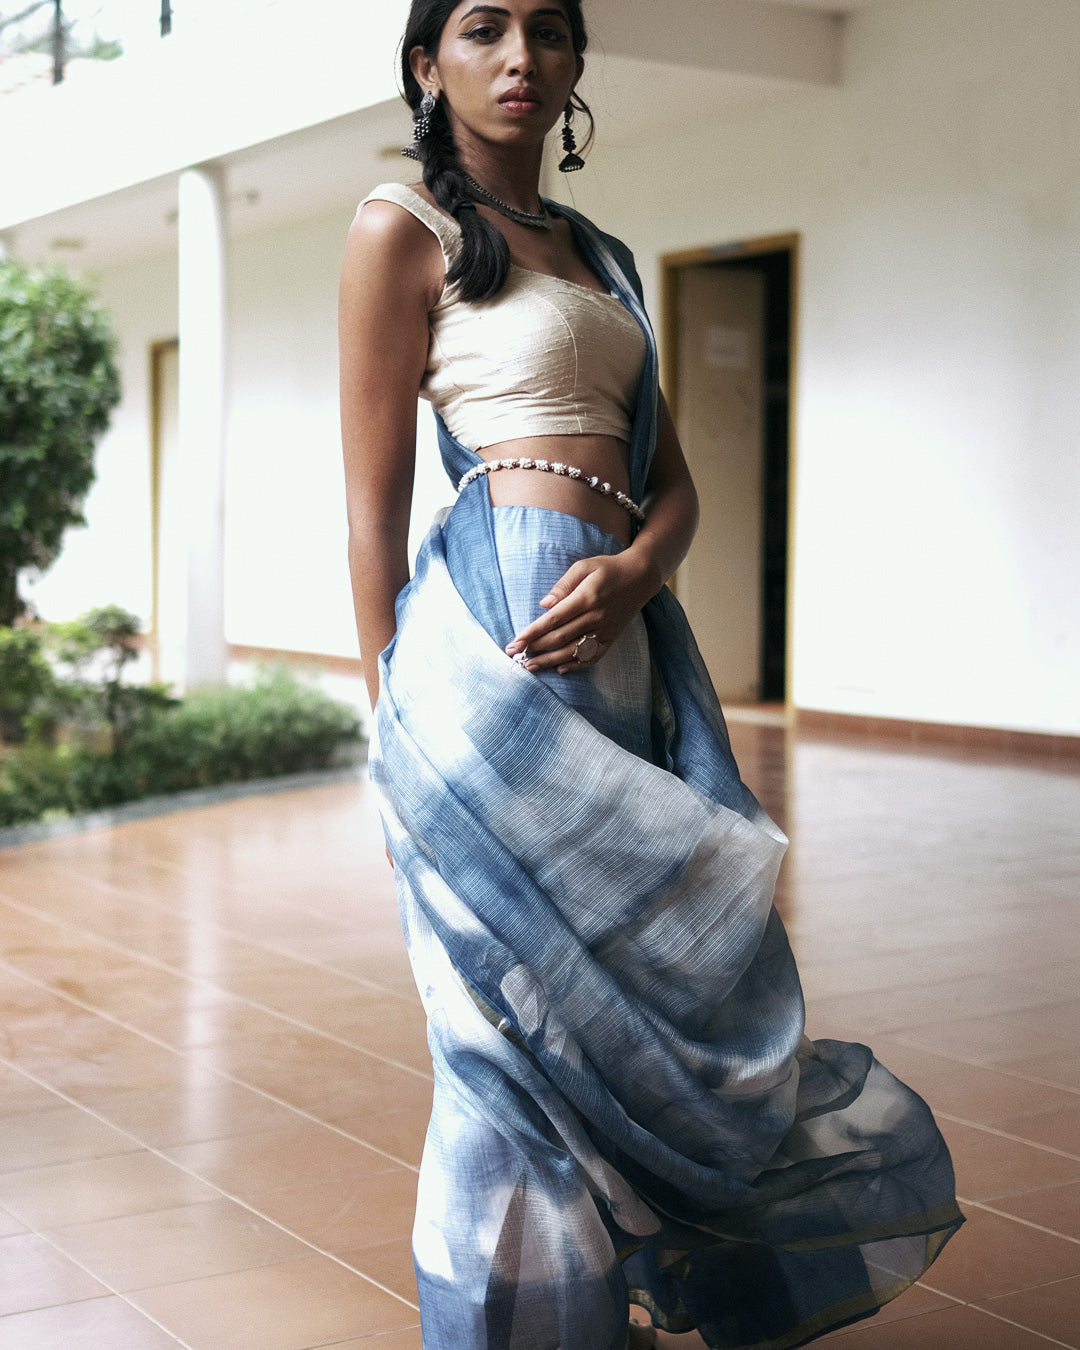 Leher - Naturally-Dyed Indigo Sari